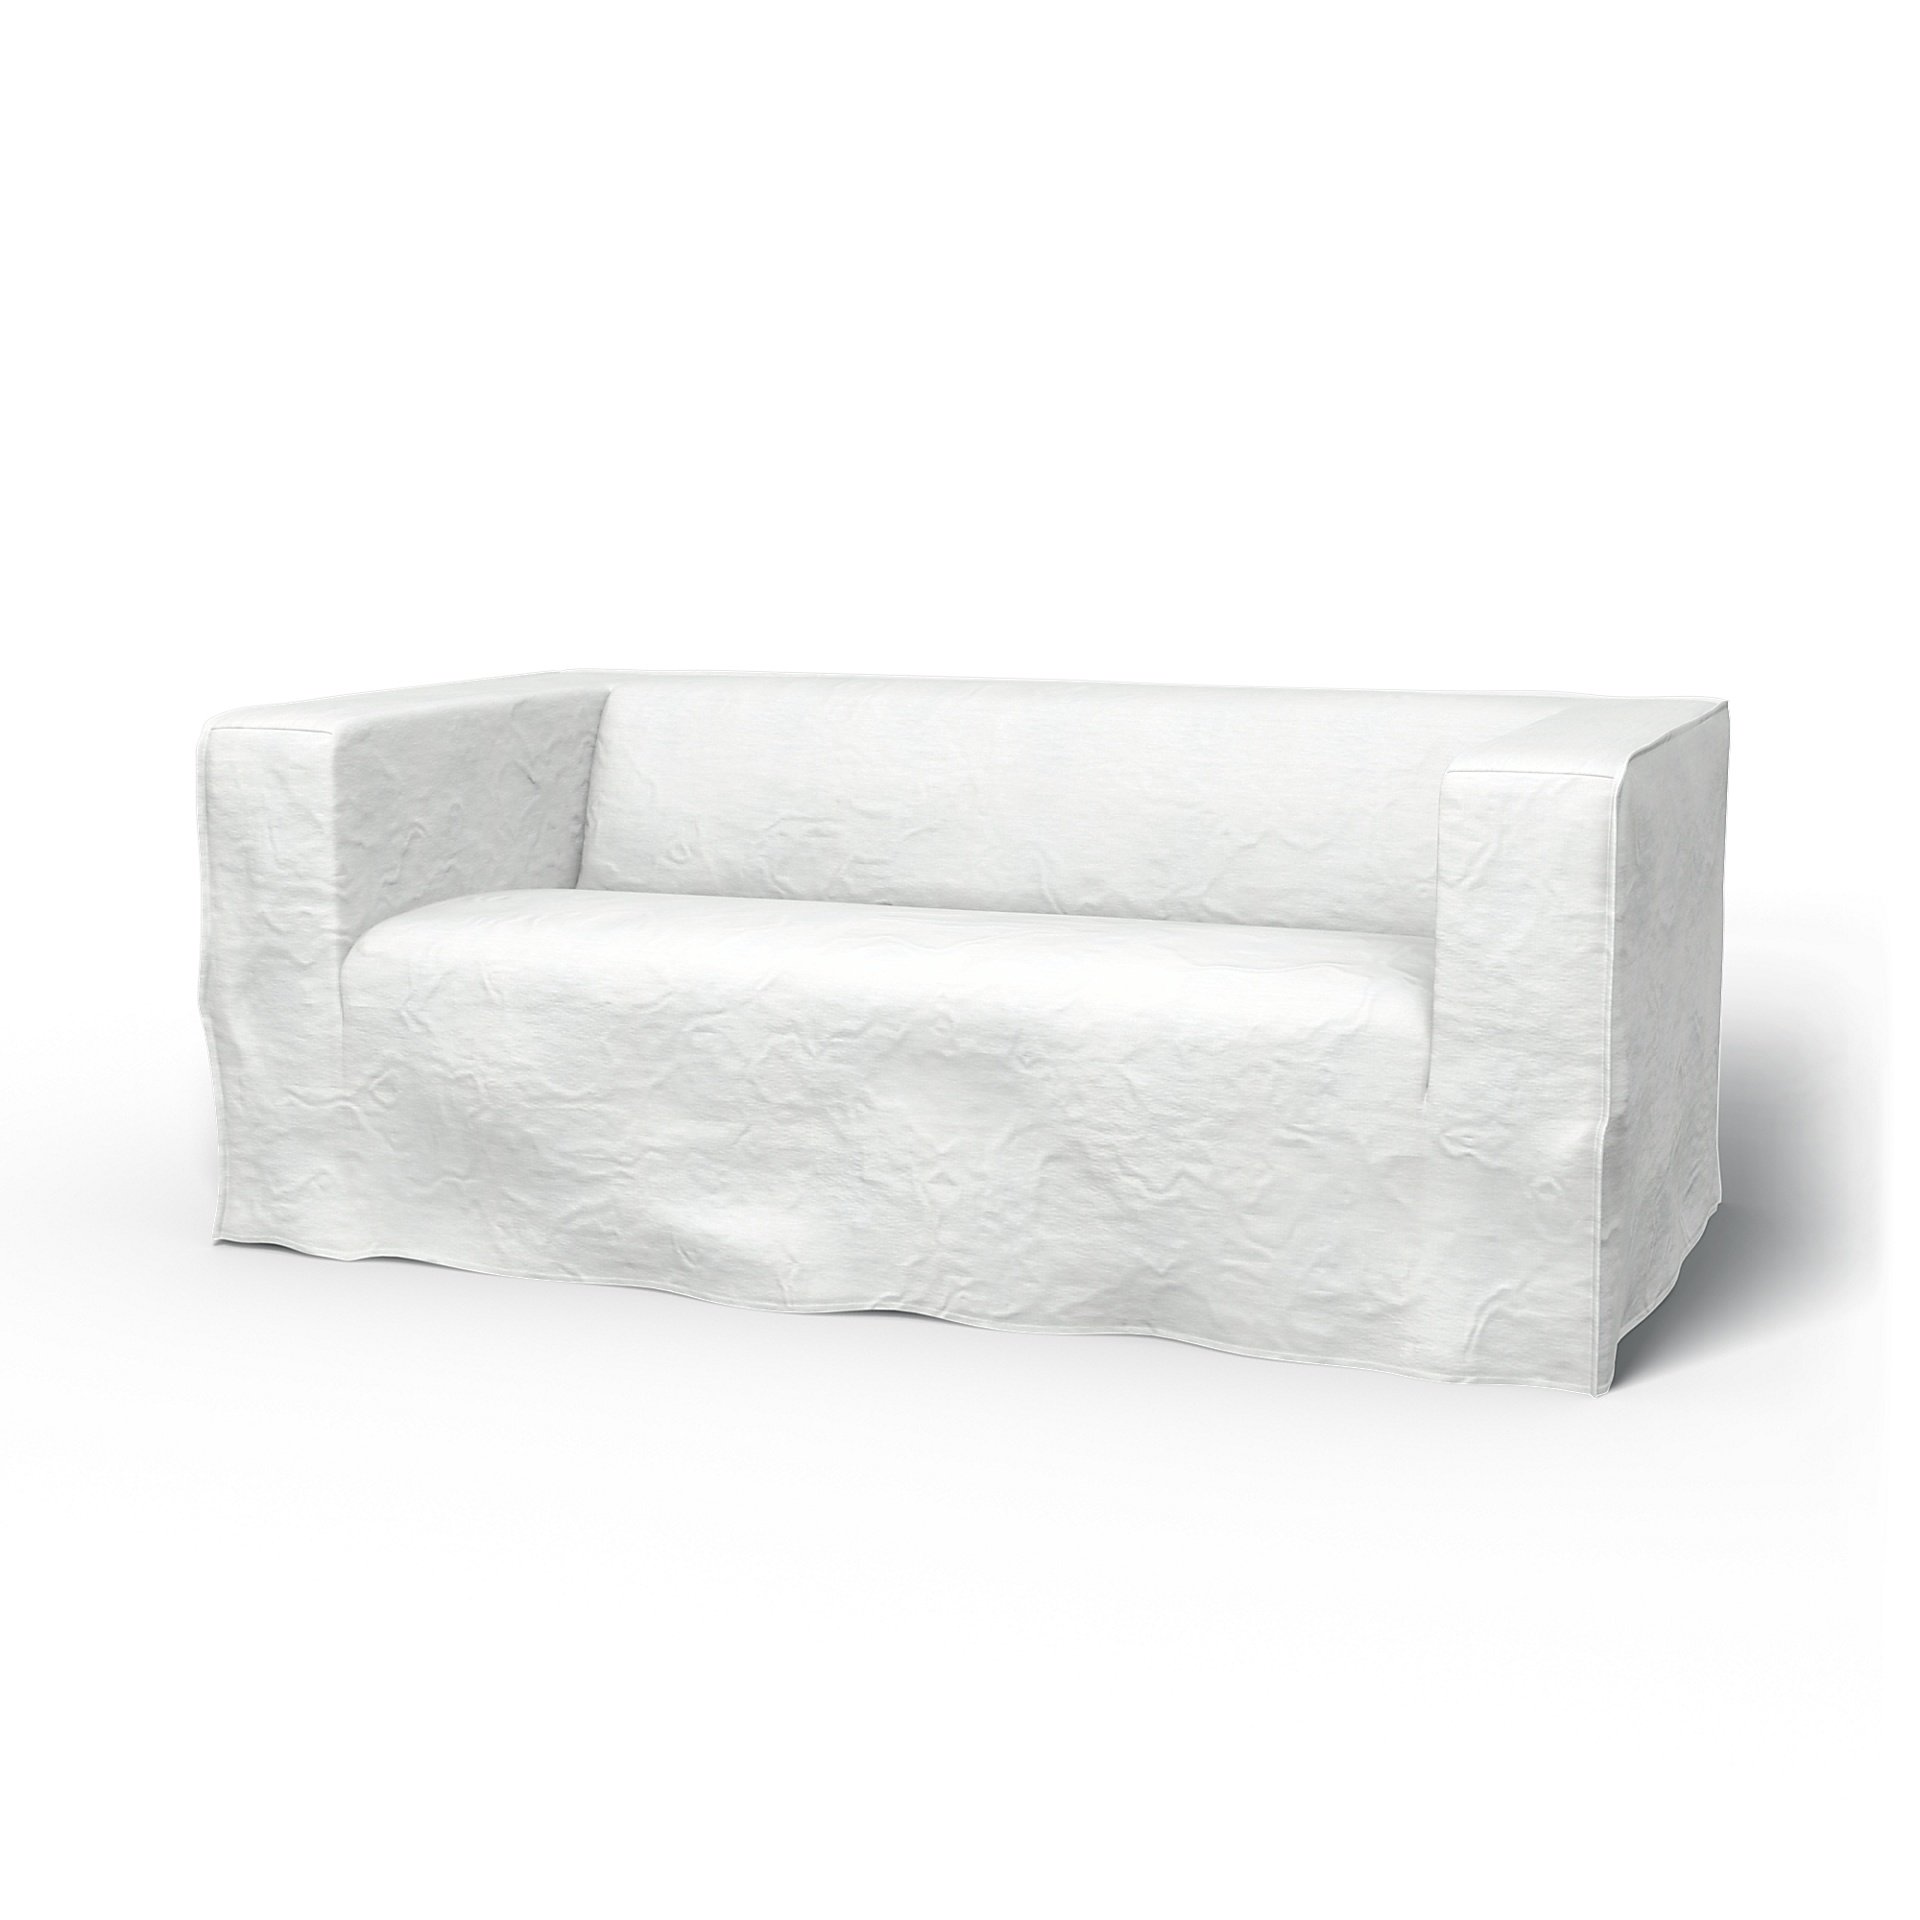 IKEA - Klippan 2 Seater Sofa Cover, White, Linen - Bemz